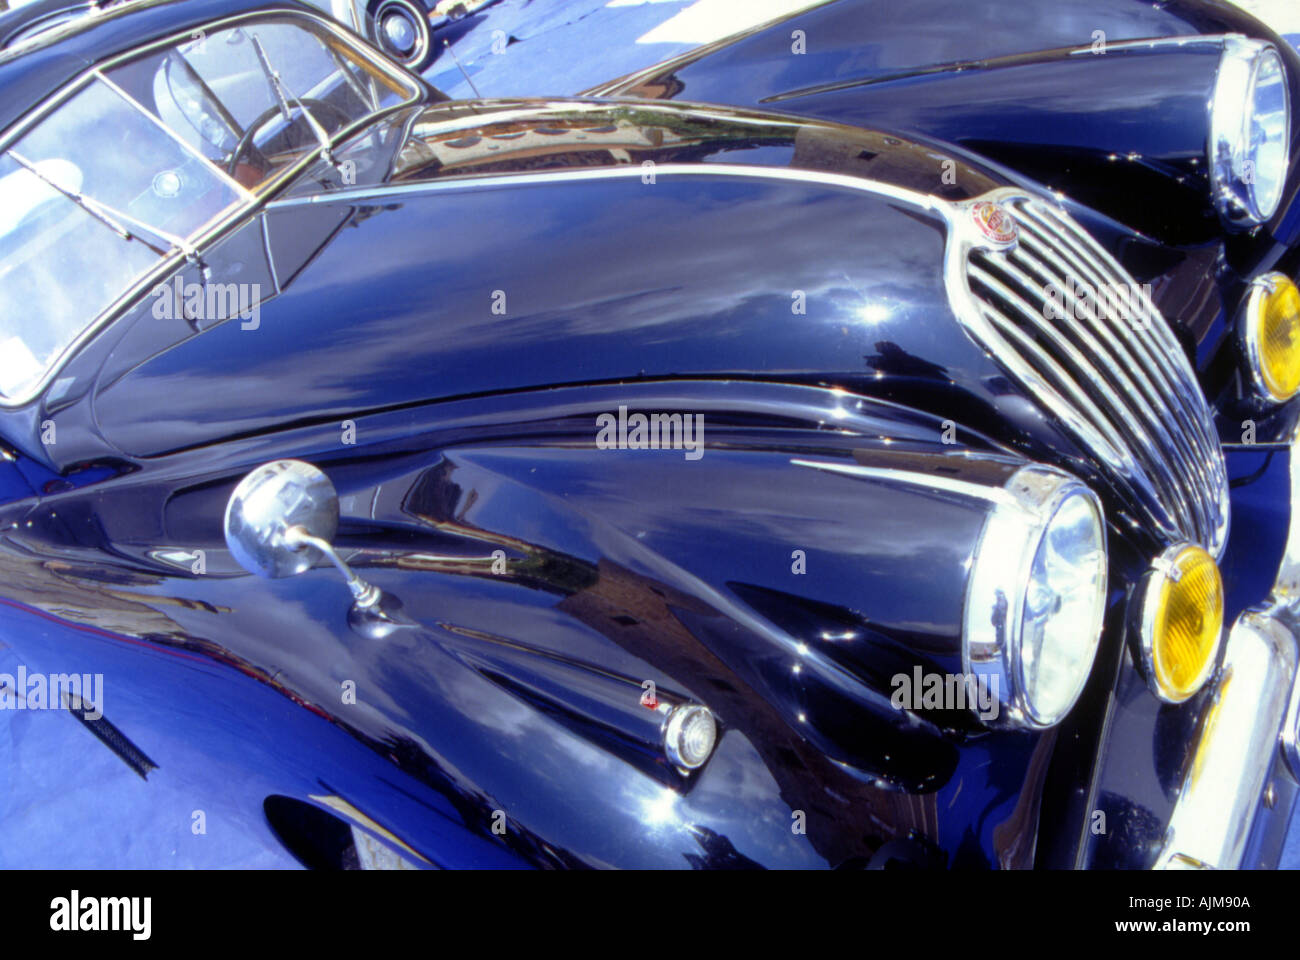 british classic car jaguar winner lemans model 1951 3 serie XK 140 conventry Stock Photo